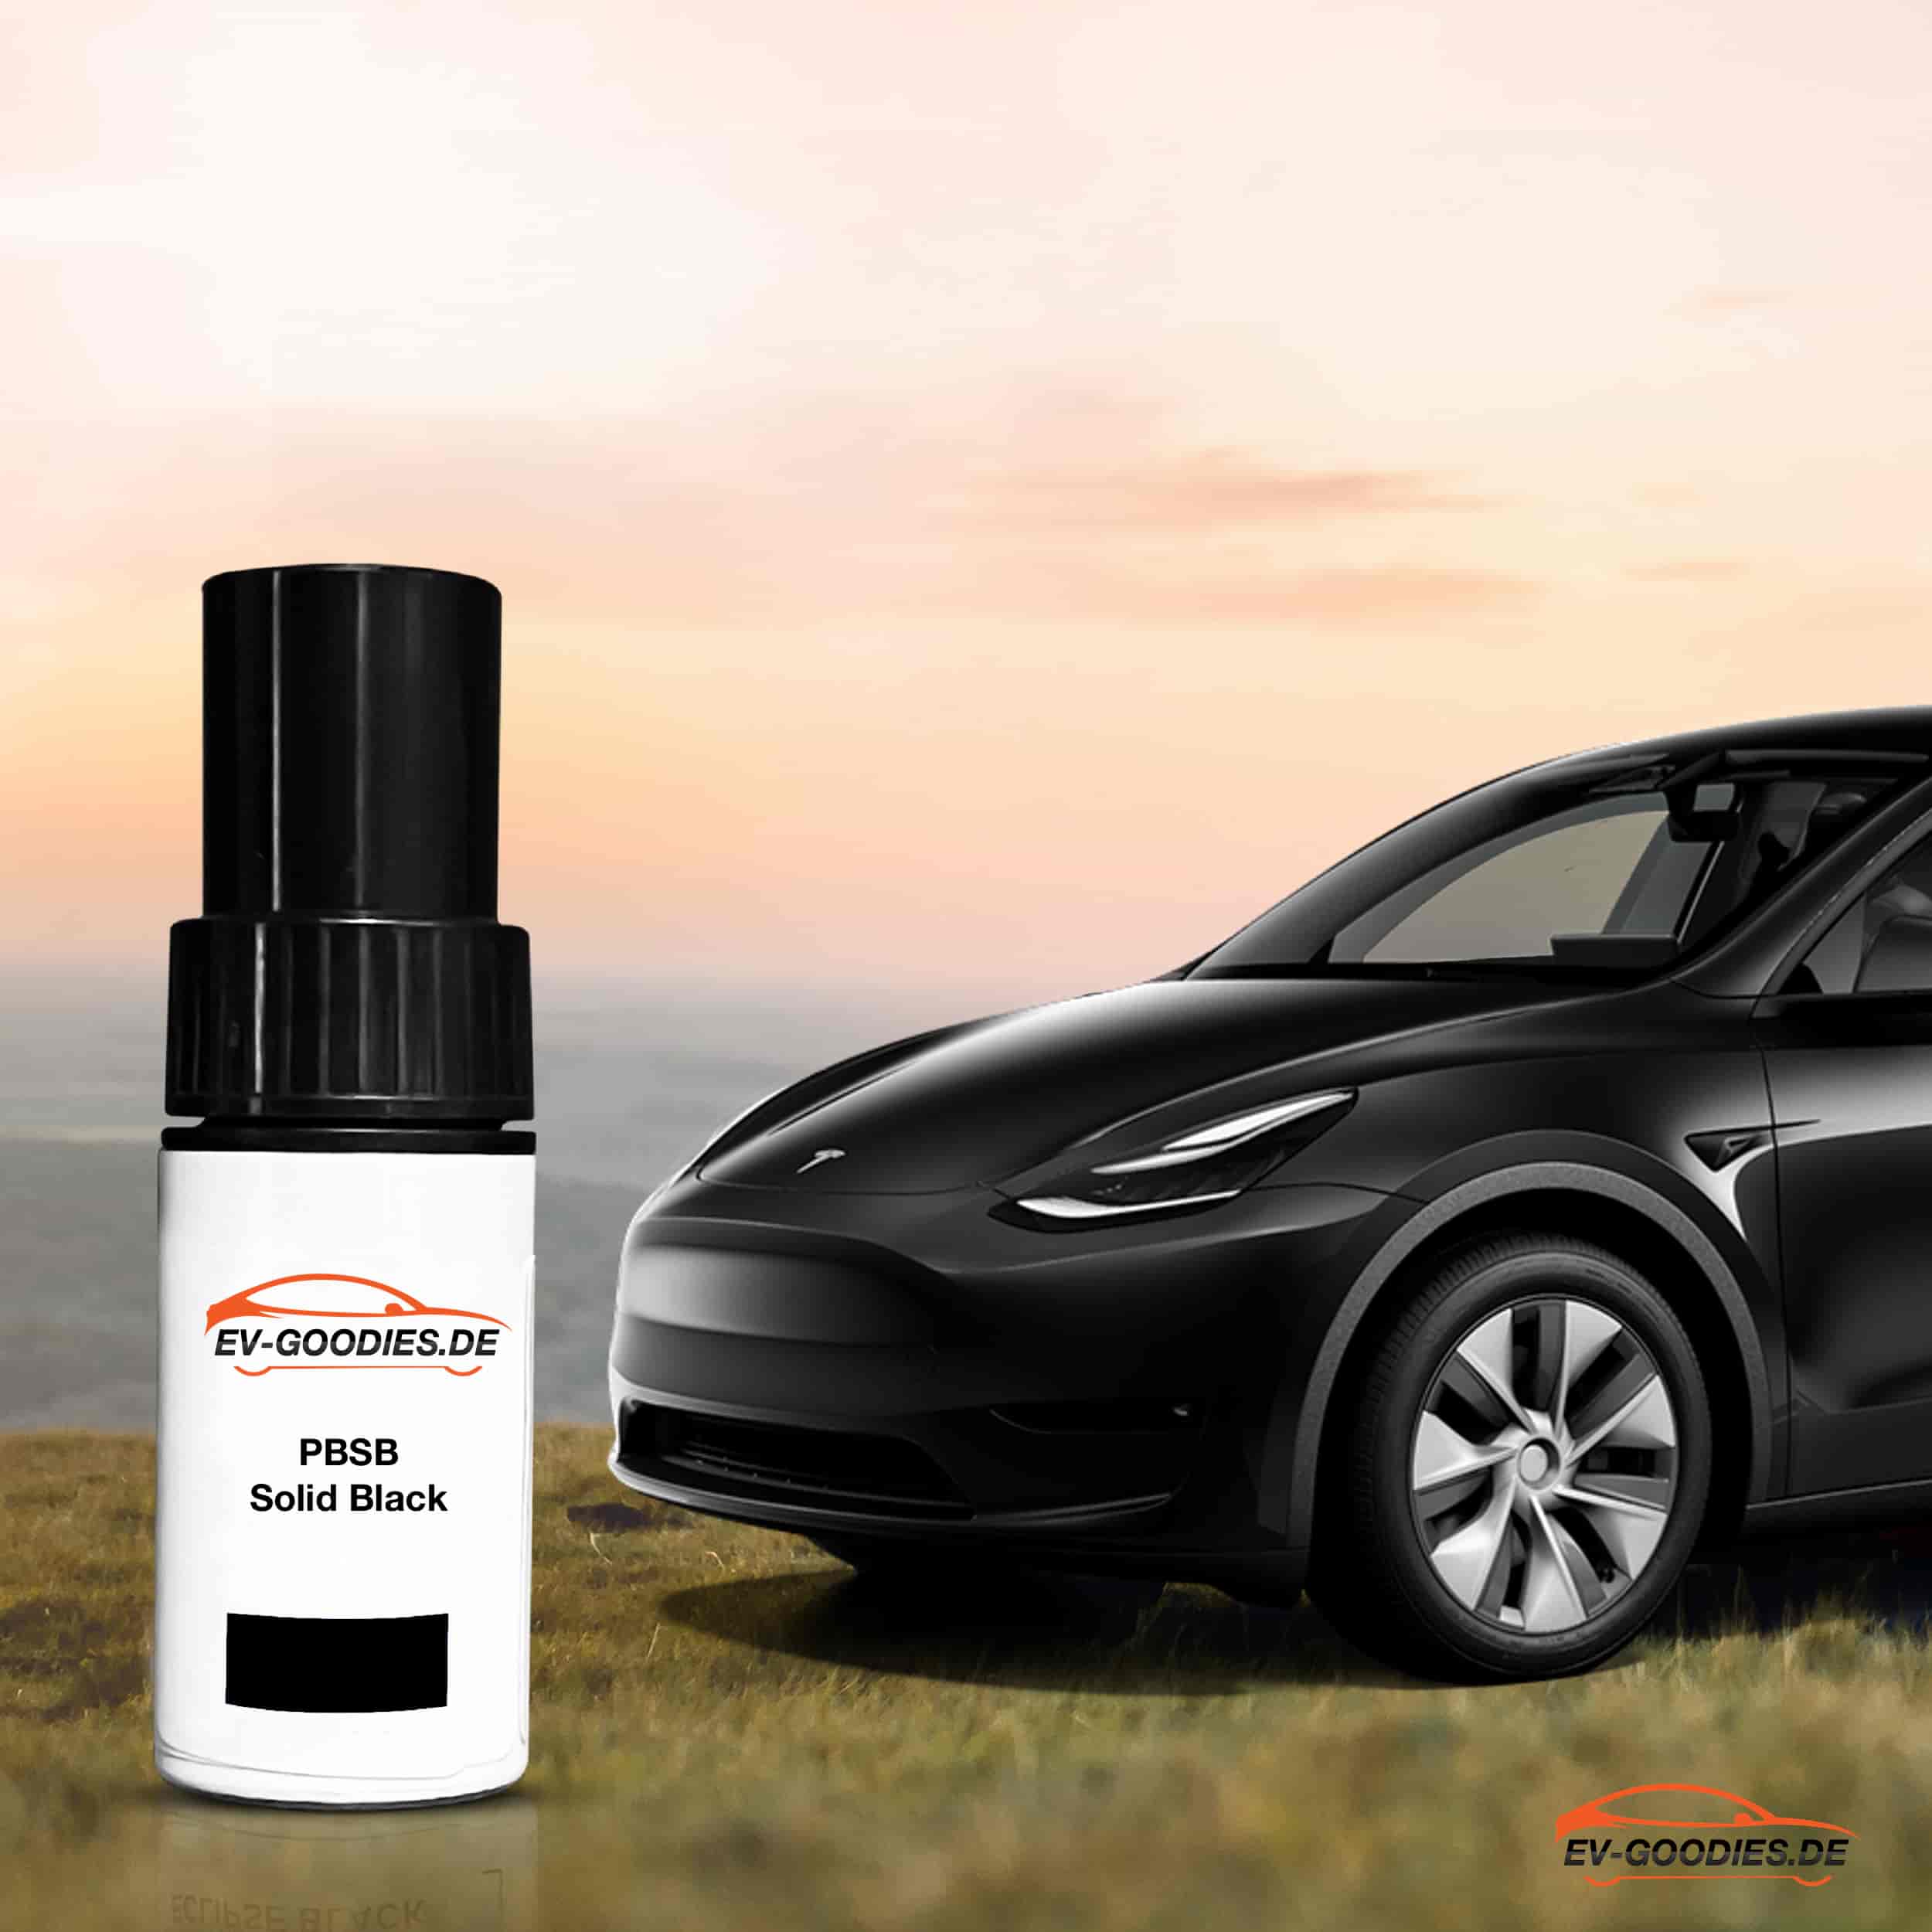 Paint brush black Solid Black for Tesla Model Y, color code: PBSB, paint repair, stone chips